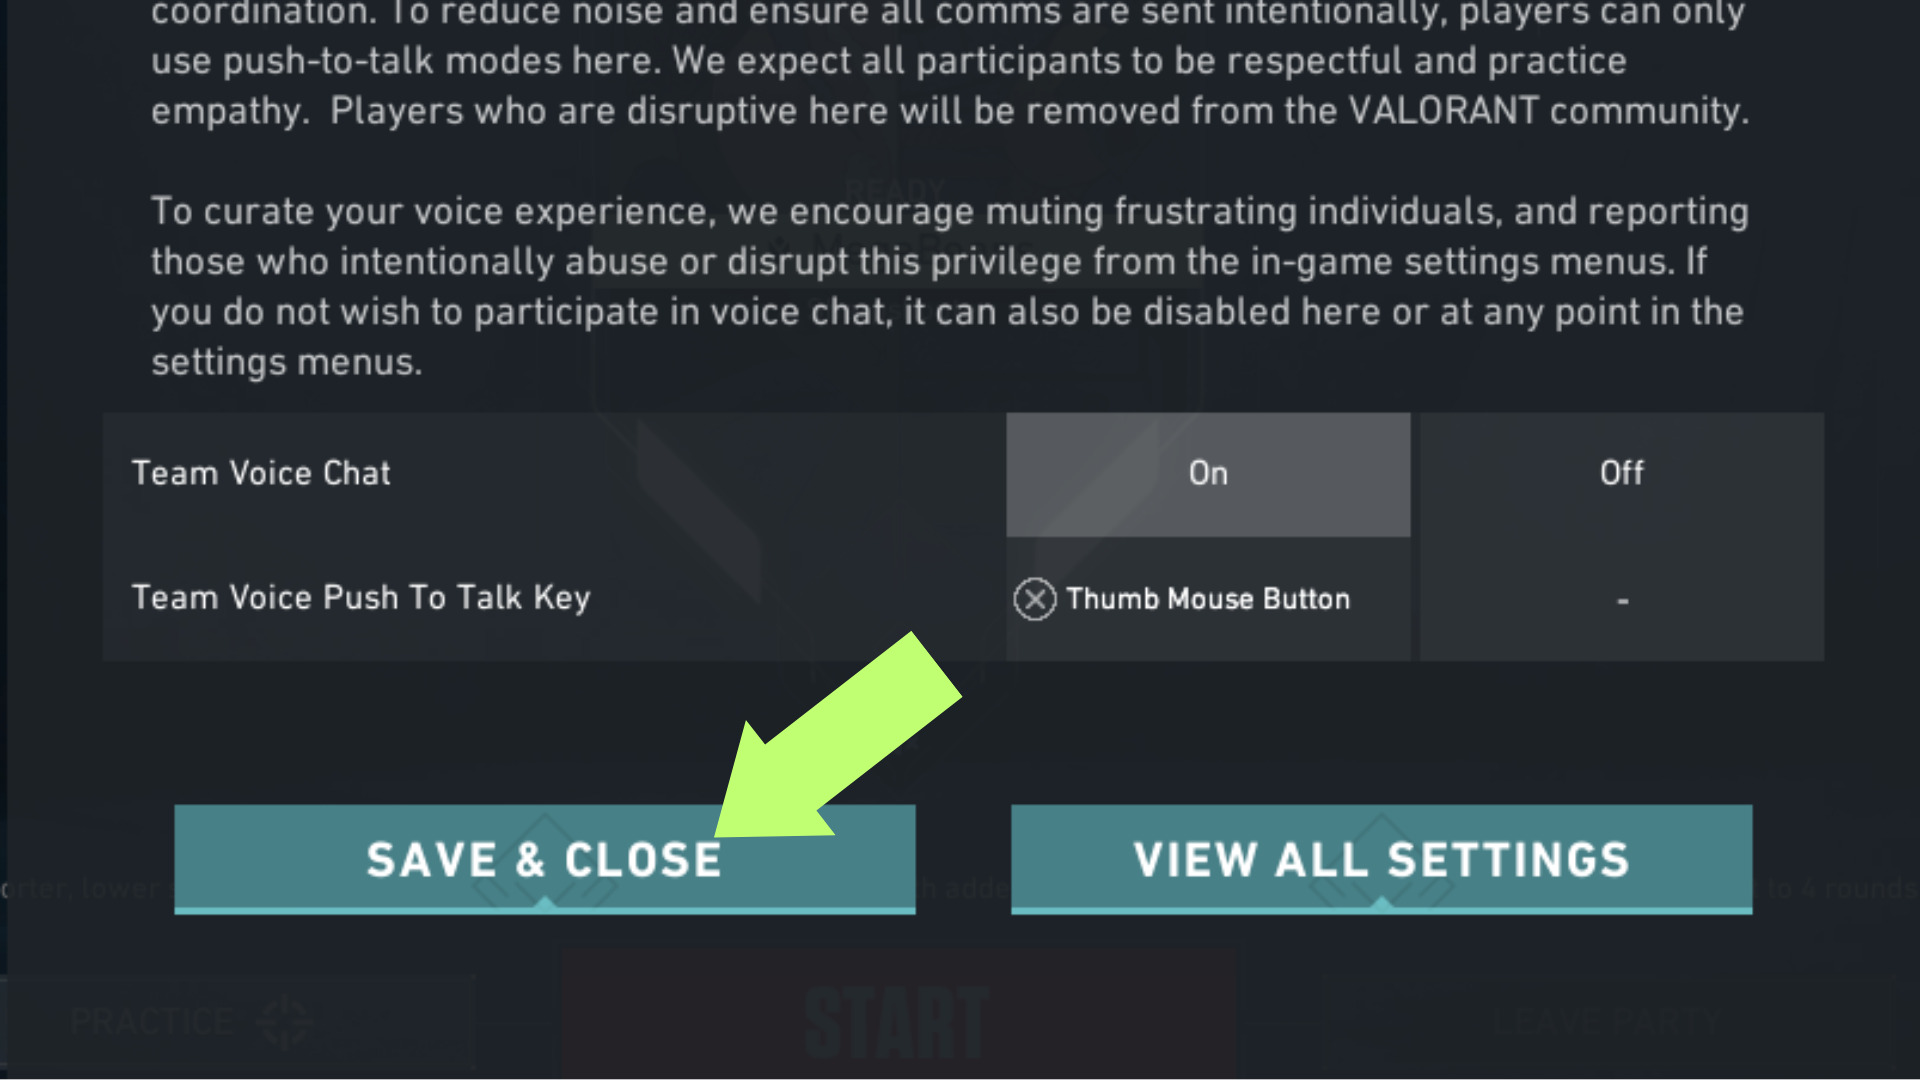 A screenshot of the settings menu in Valorant